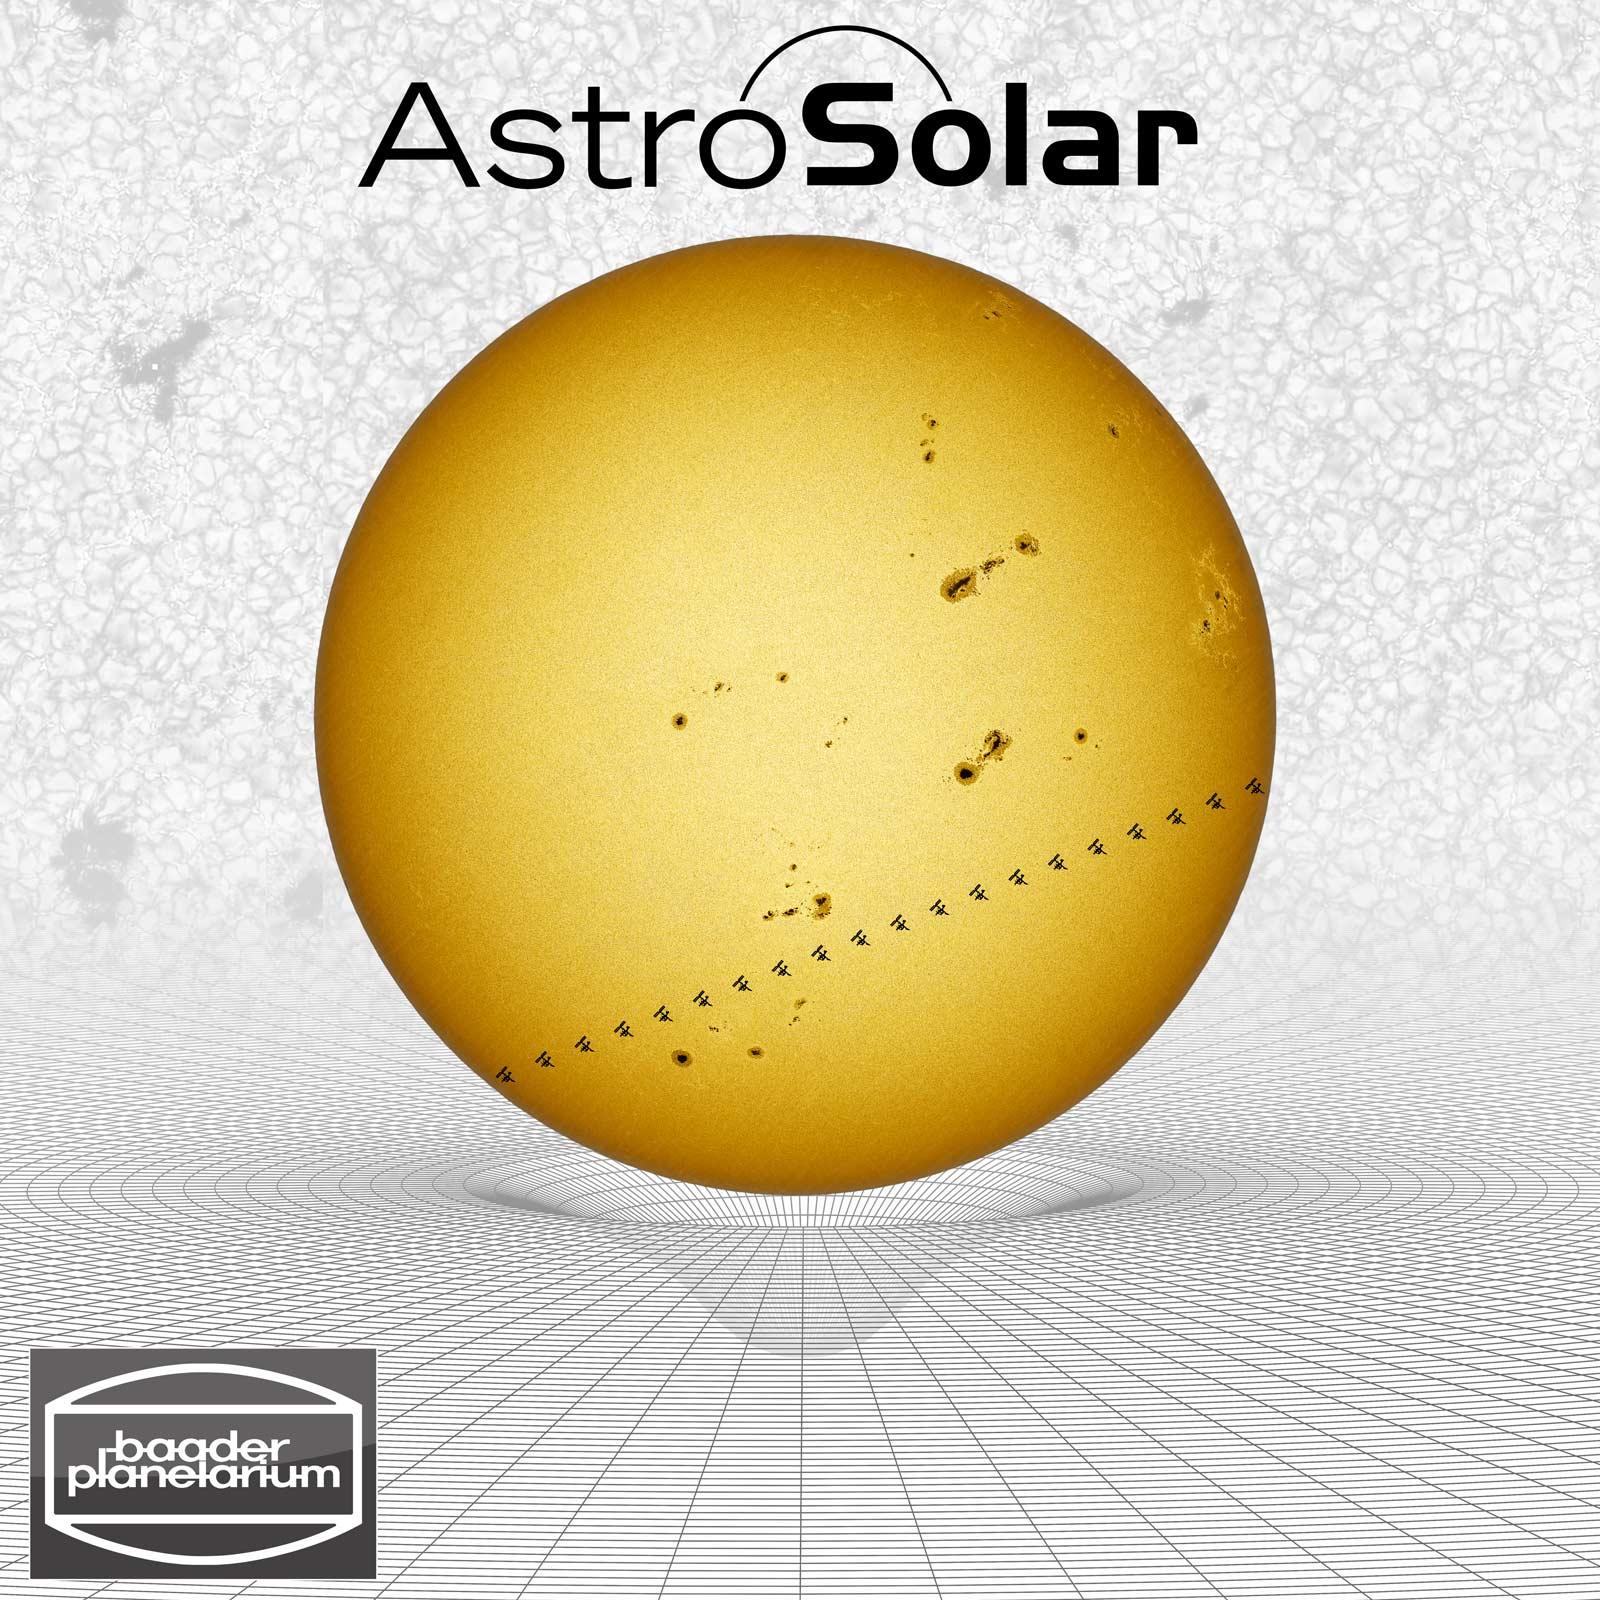 Alles zur Sonnenbeobachtung auf www.AstroSolar.com